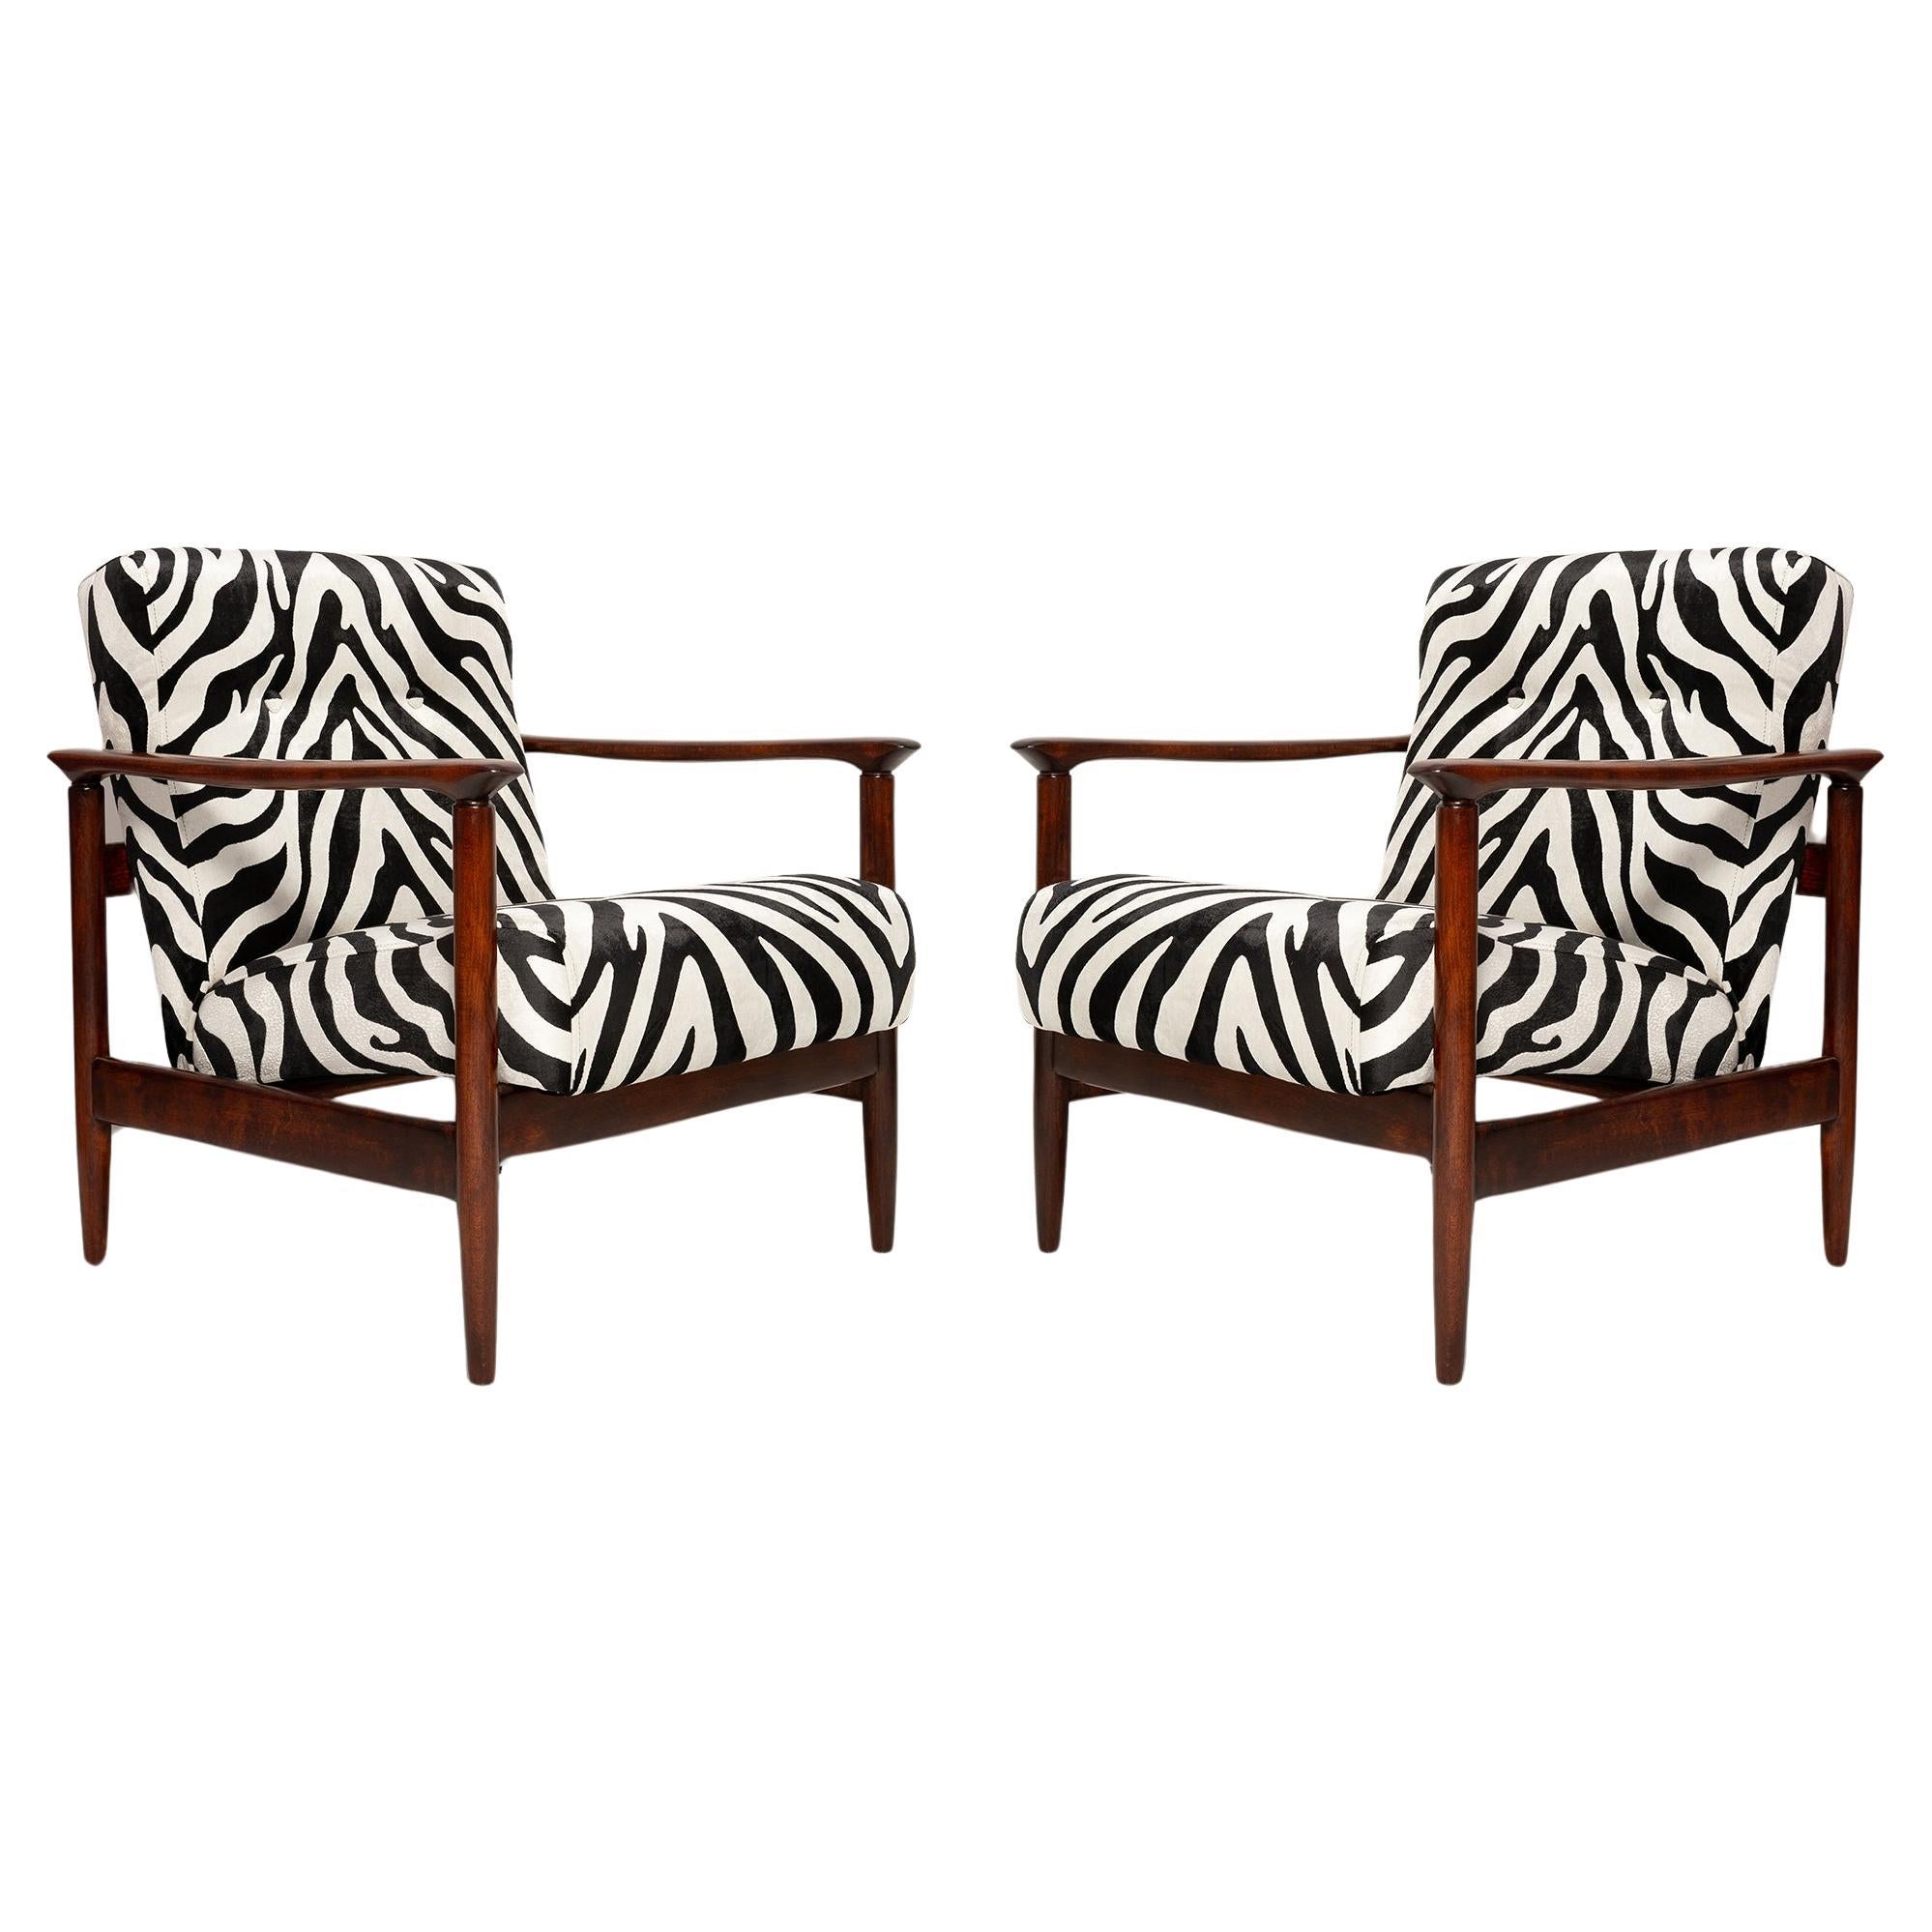 Pair of Mid-Century Zebra Velvet Armchairs, GFM 142, Edmund Homa, Europe, 1960s For Sale